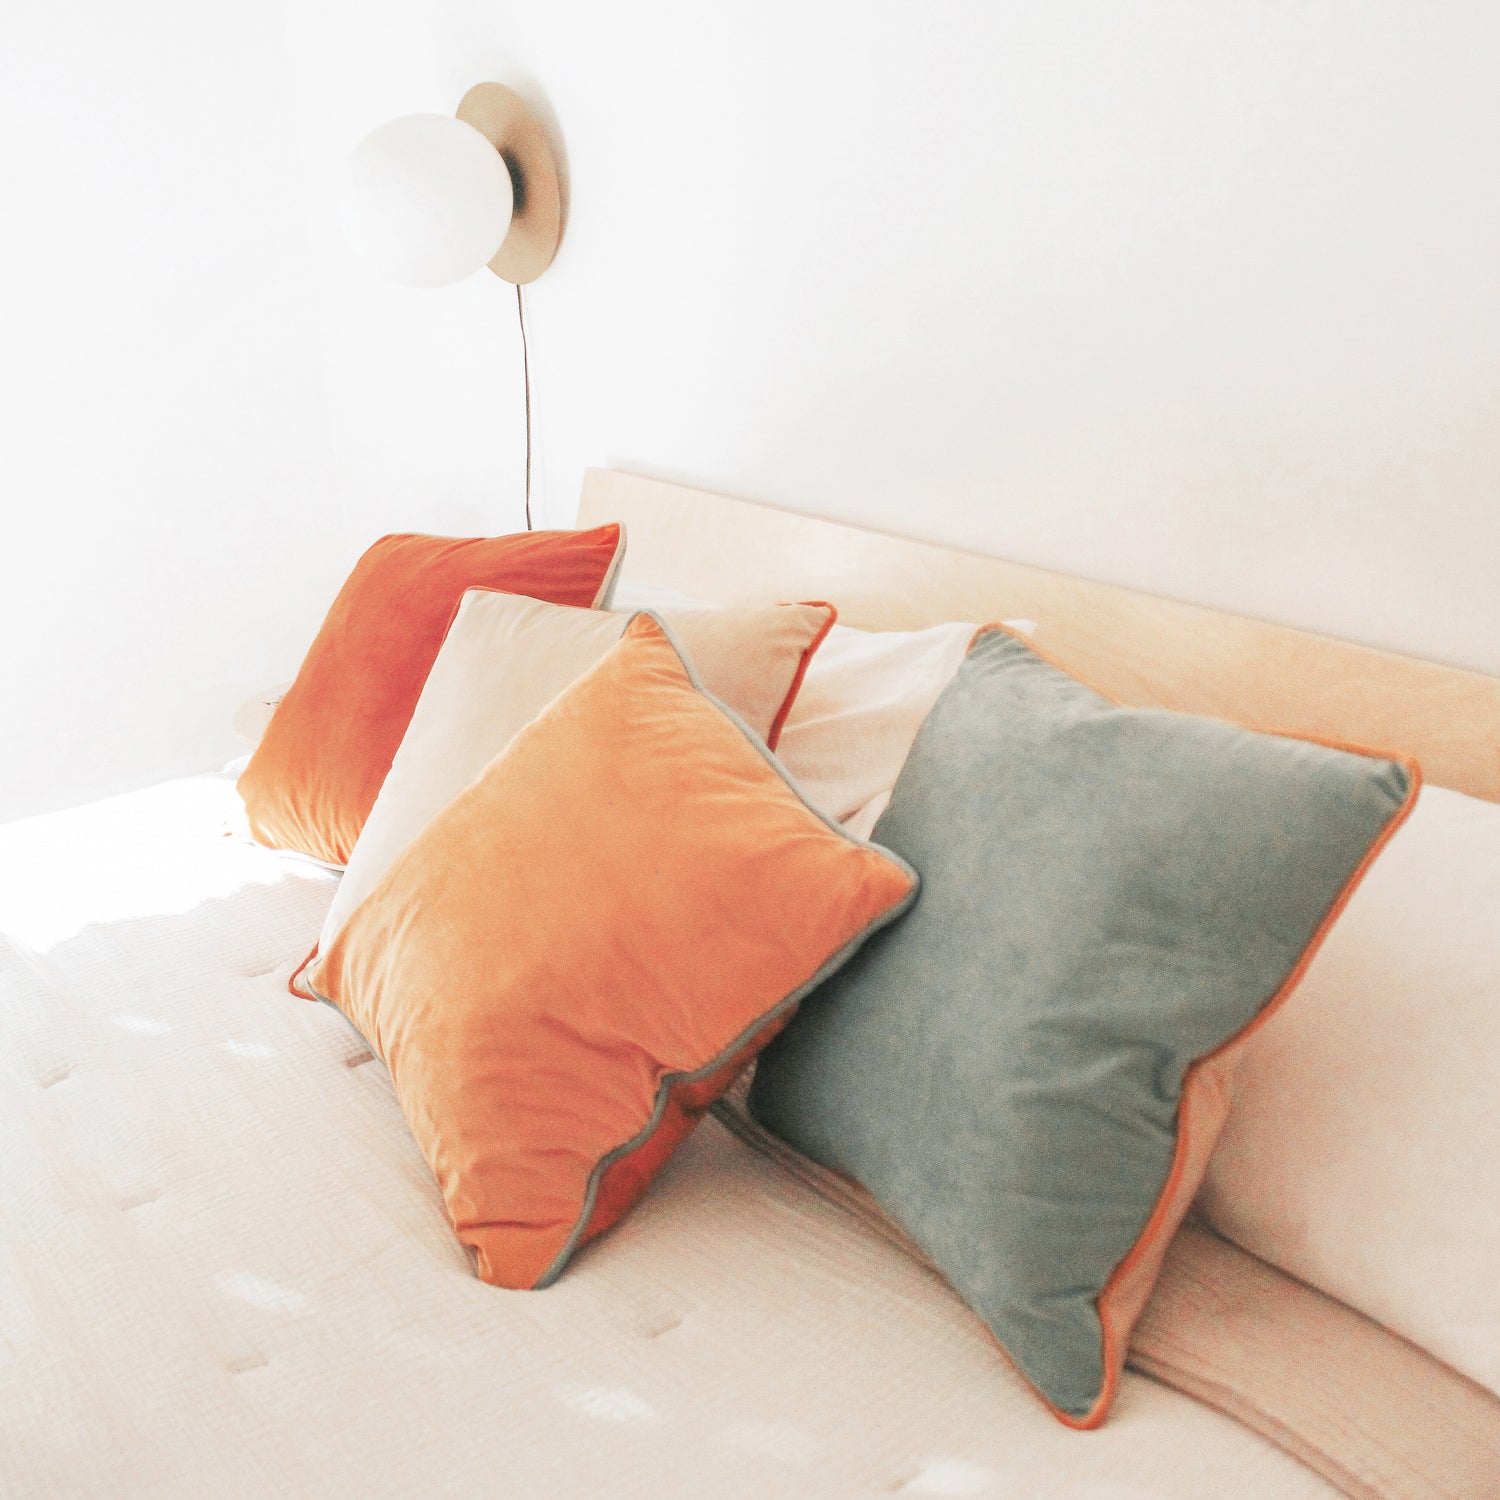 Colibri Pillows (4-Pack) - Orange/Teal